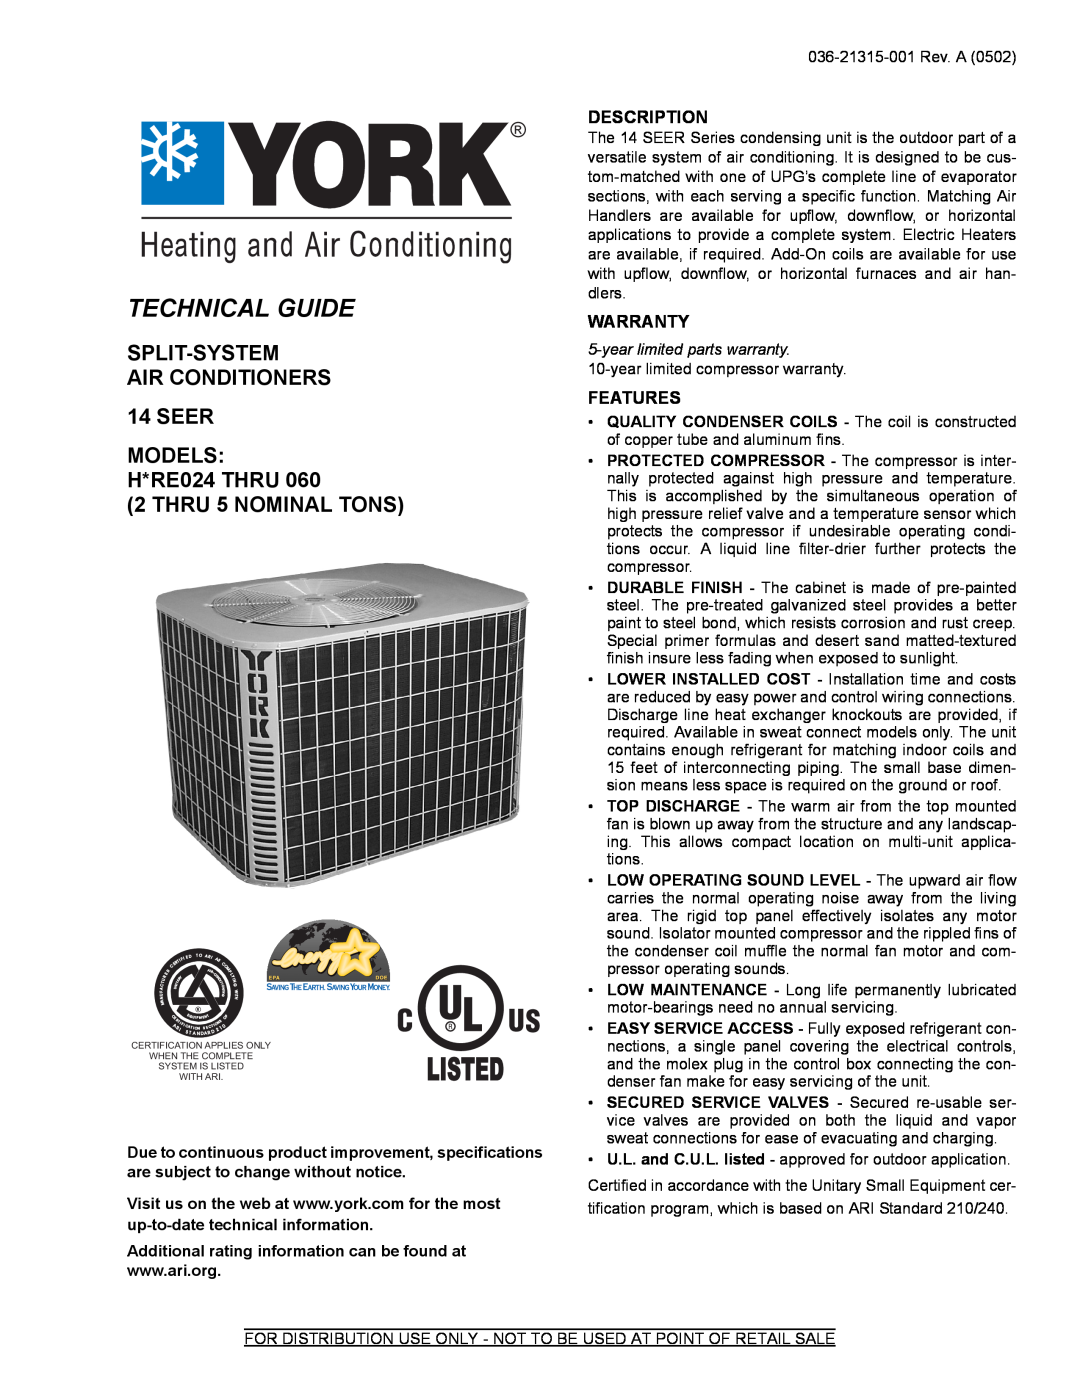 York H*RE024 warranty Description, Warranty, Features, Technical Guide, SPLIT-SYSTEM AIR CONDITIONERS 14 SEER 